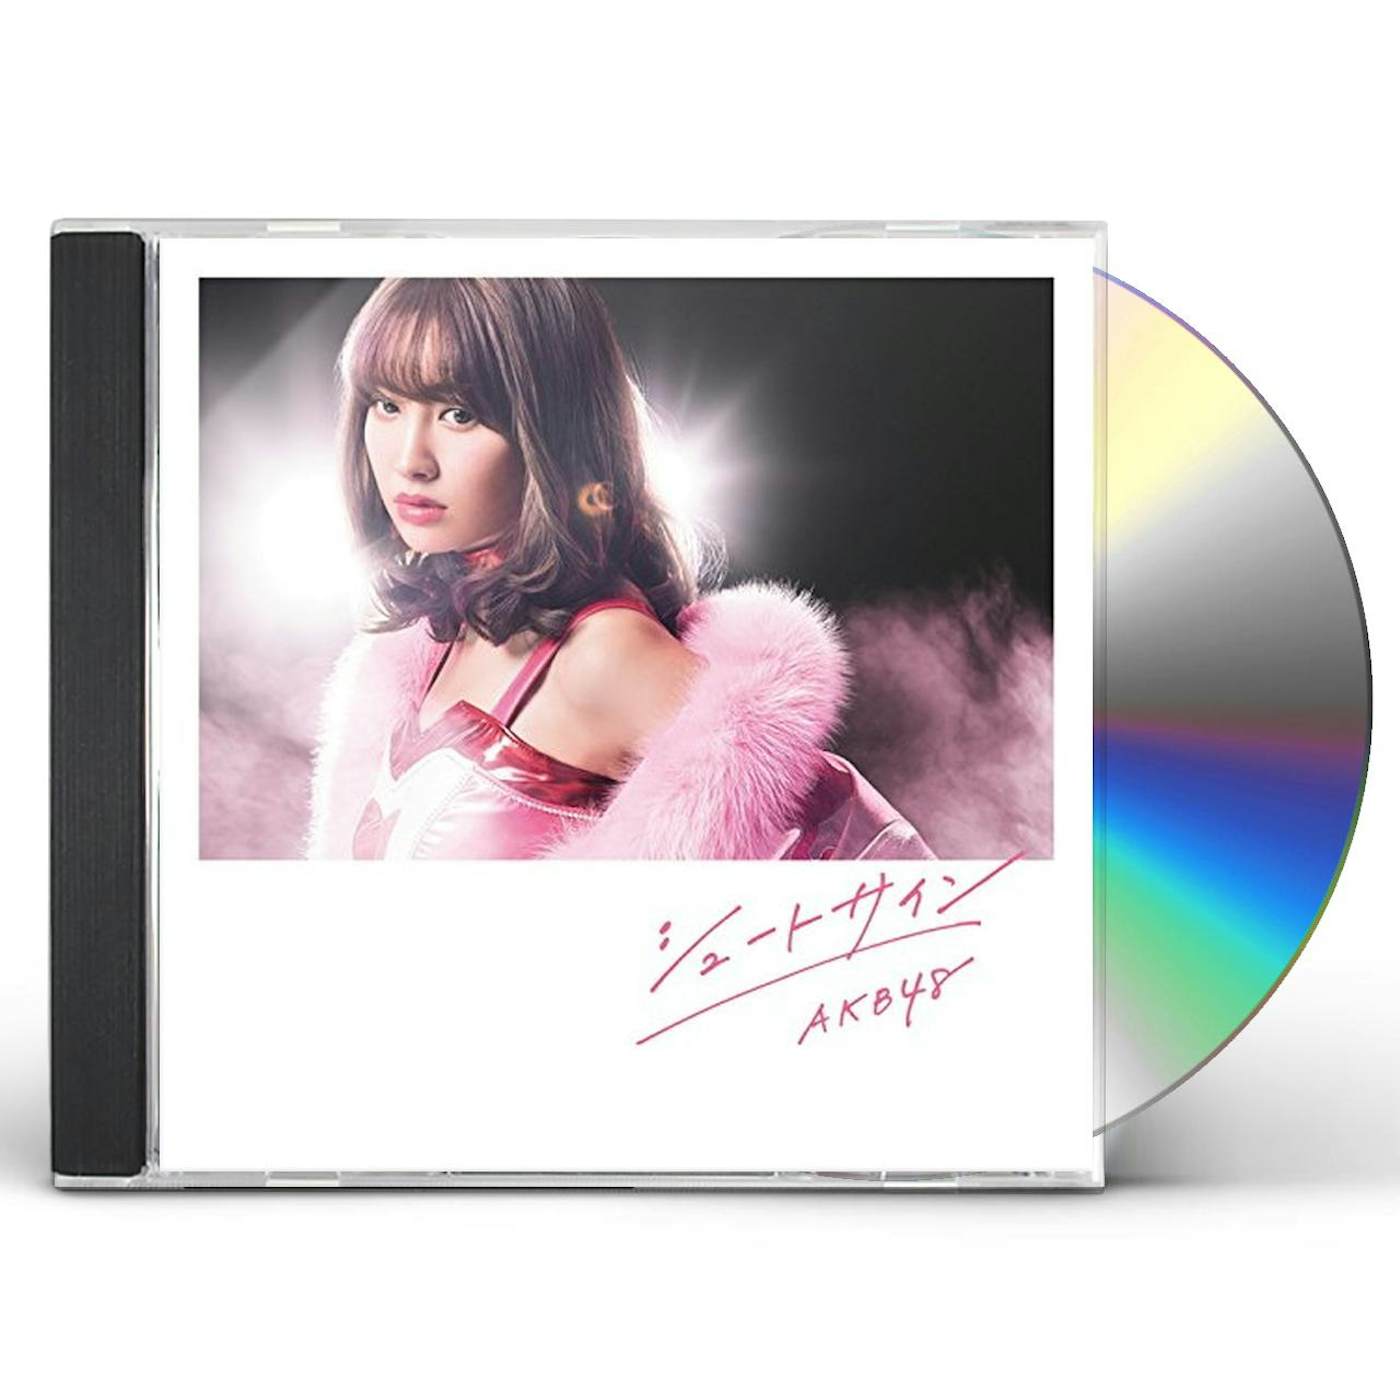 AKB48 SHOOT SIGN (TYPE-I) CD